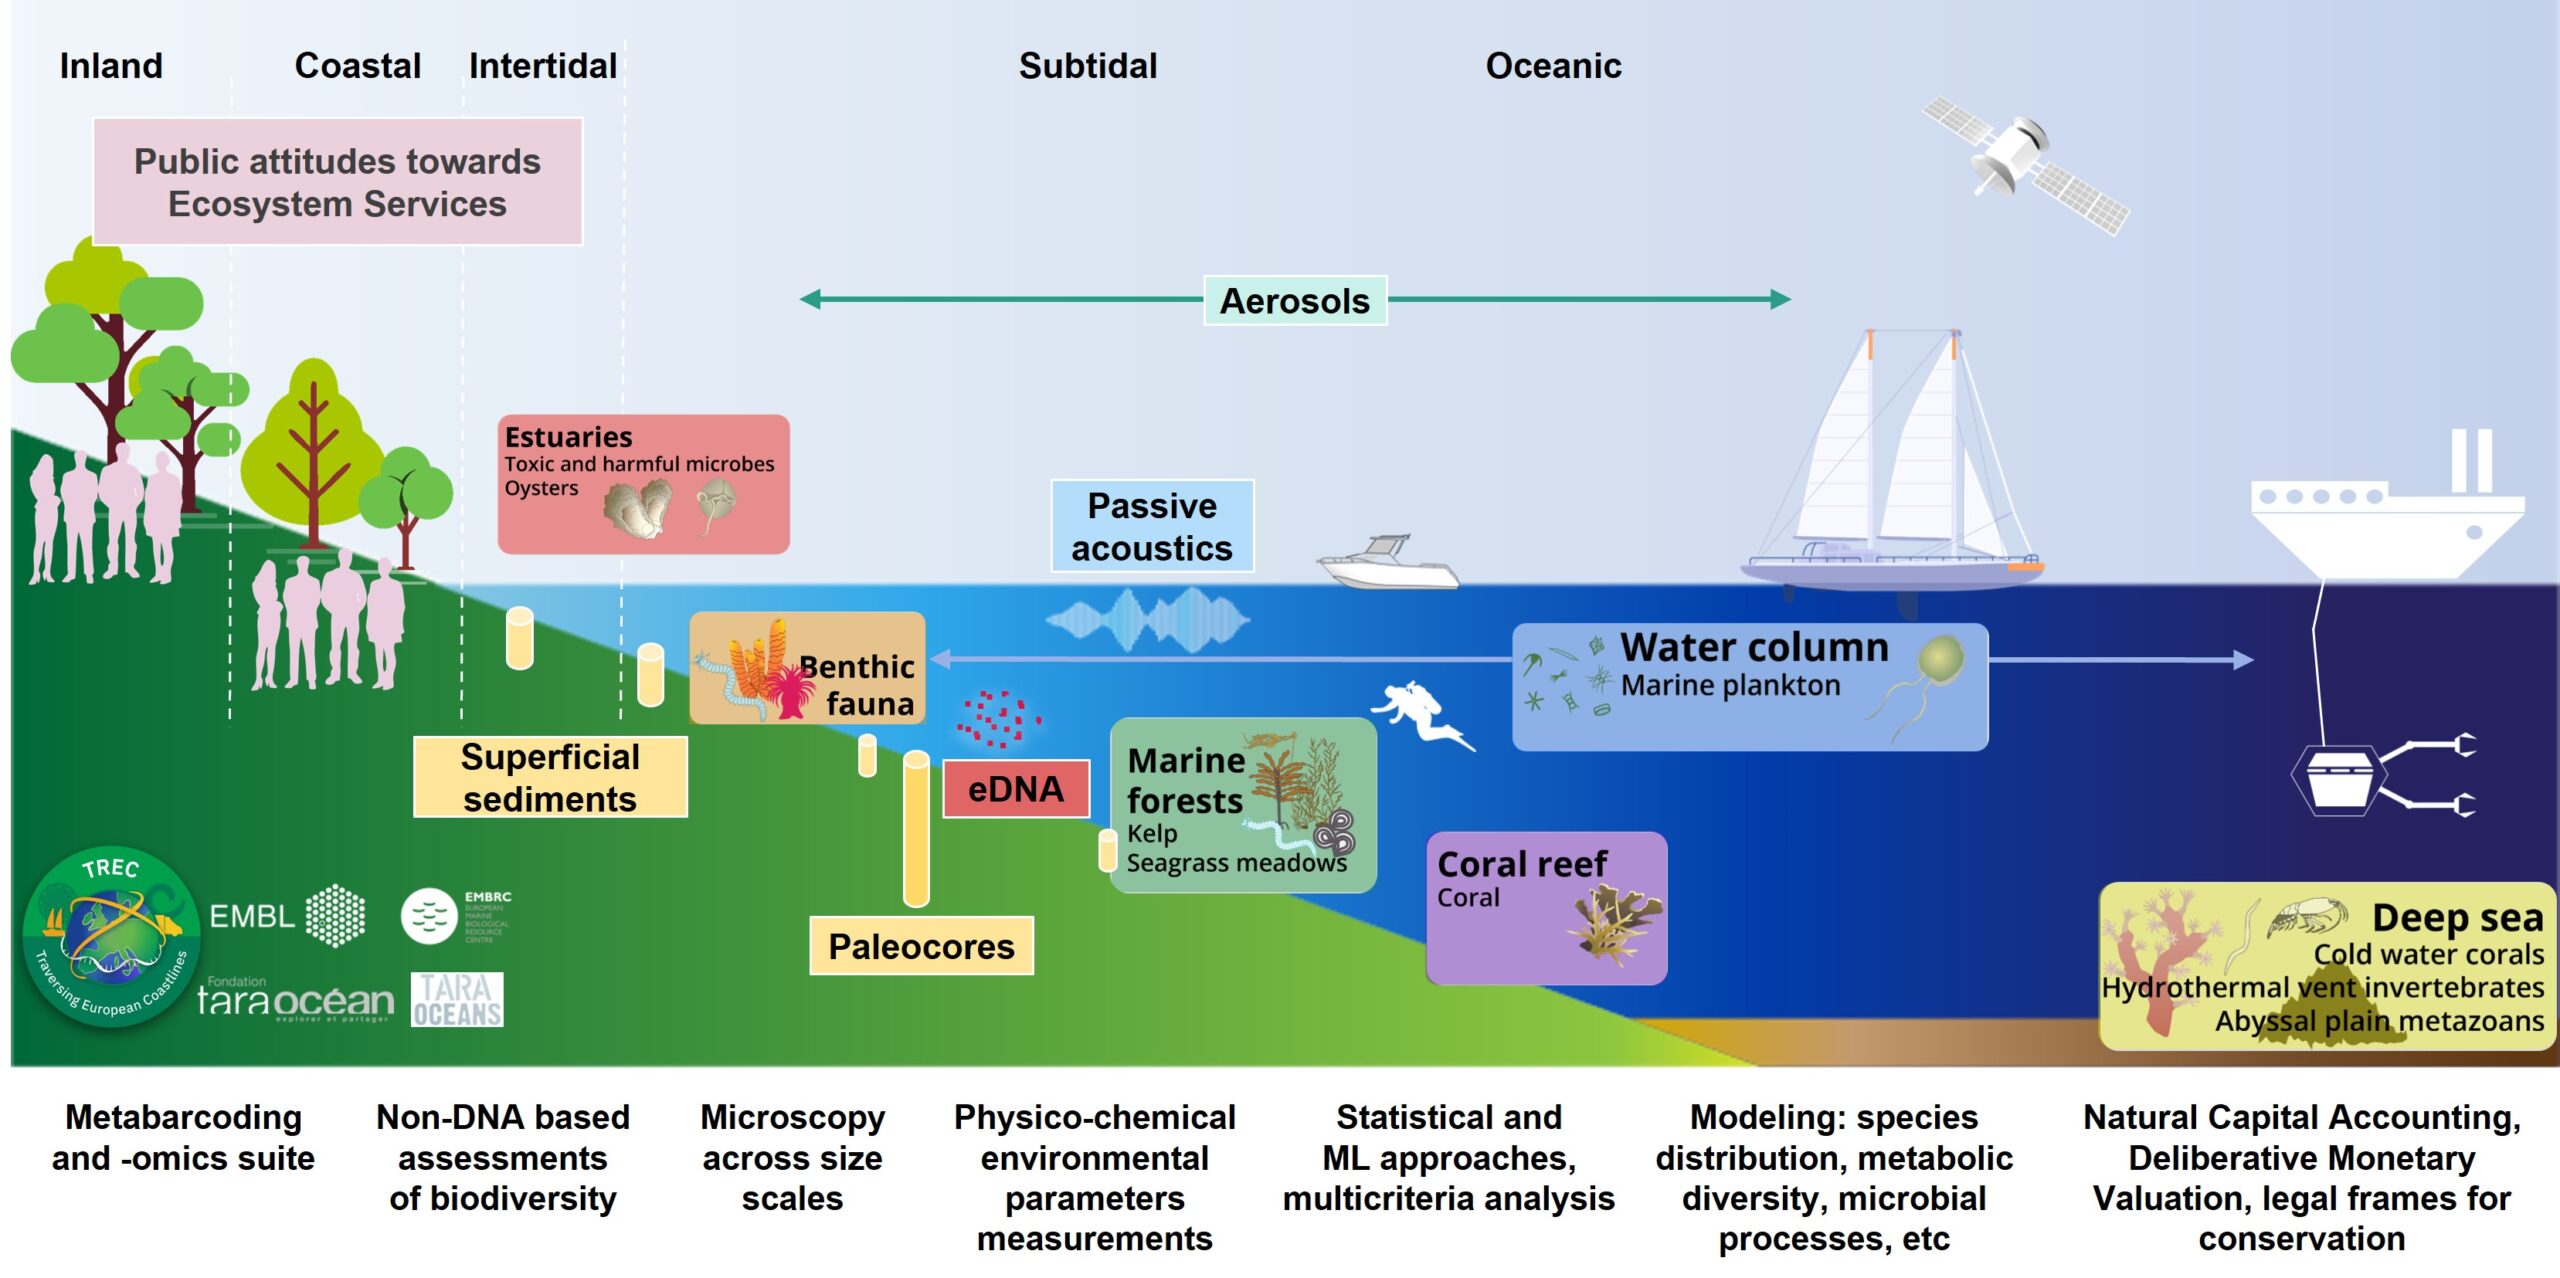 Infographic describing the different components of BIOcean5D against the coastline. Credit: EMBL / Noan LeBescot